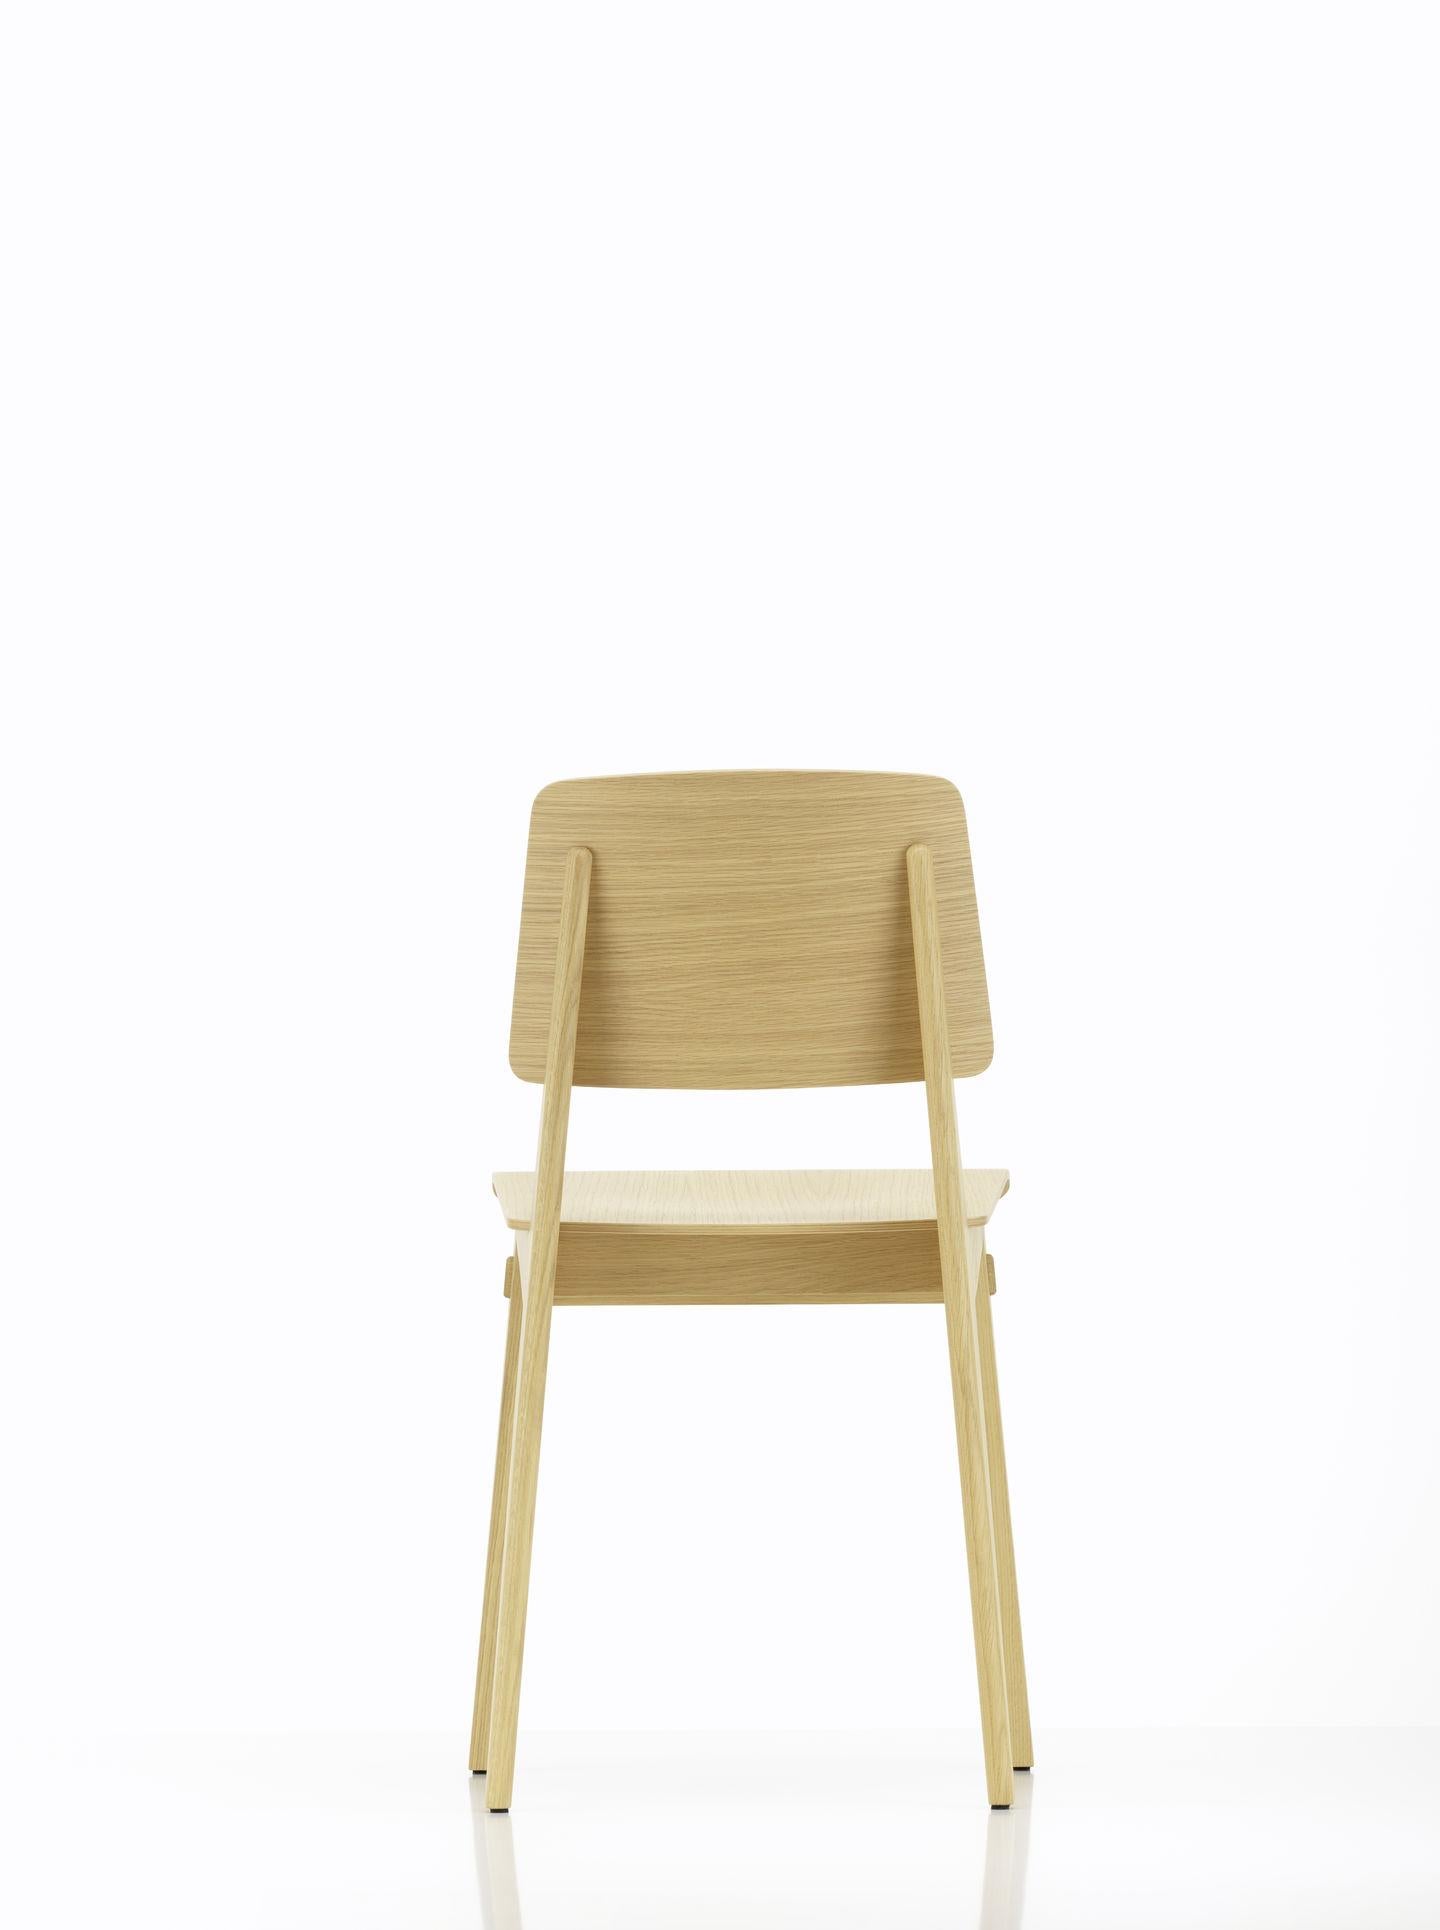 Jean Prouvé Light Oak Chaise Tout Bois Chair by Vitra 9